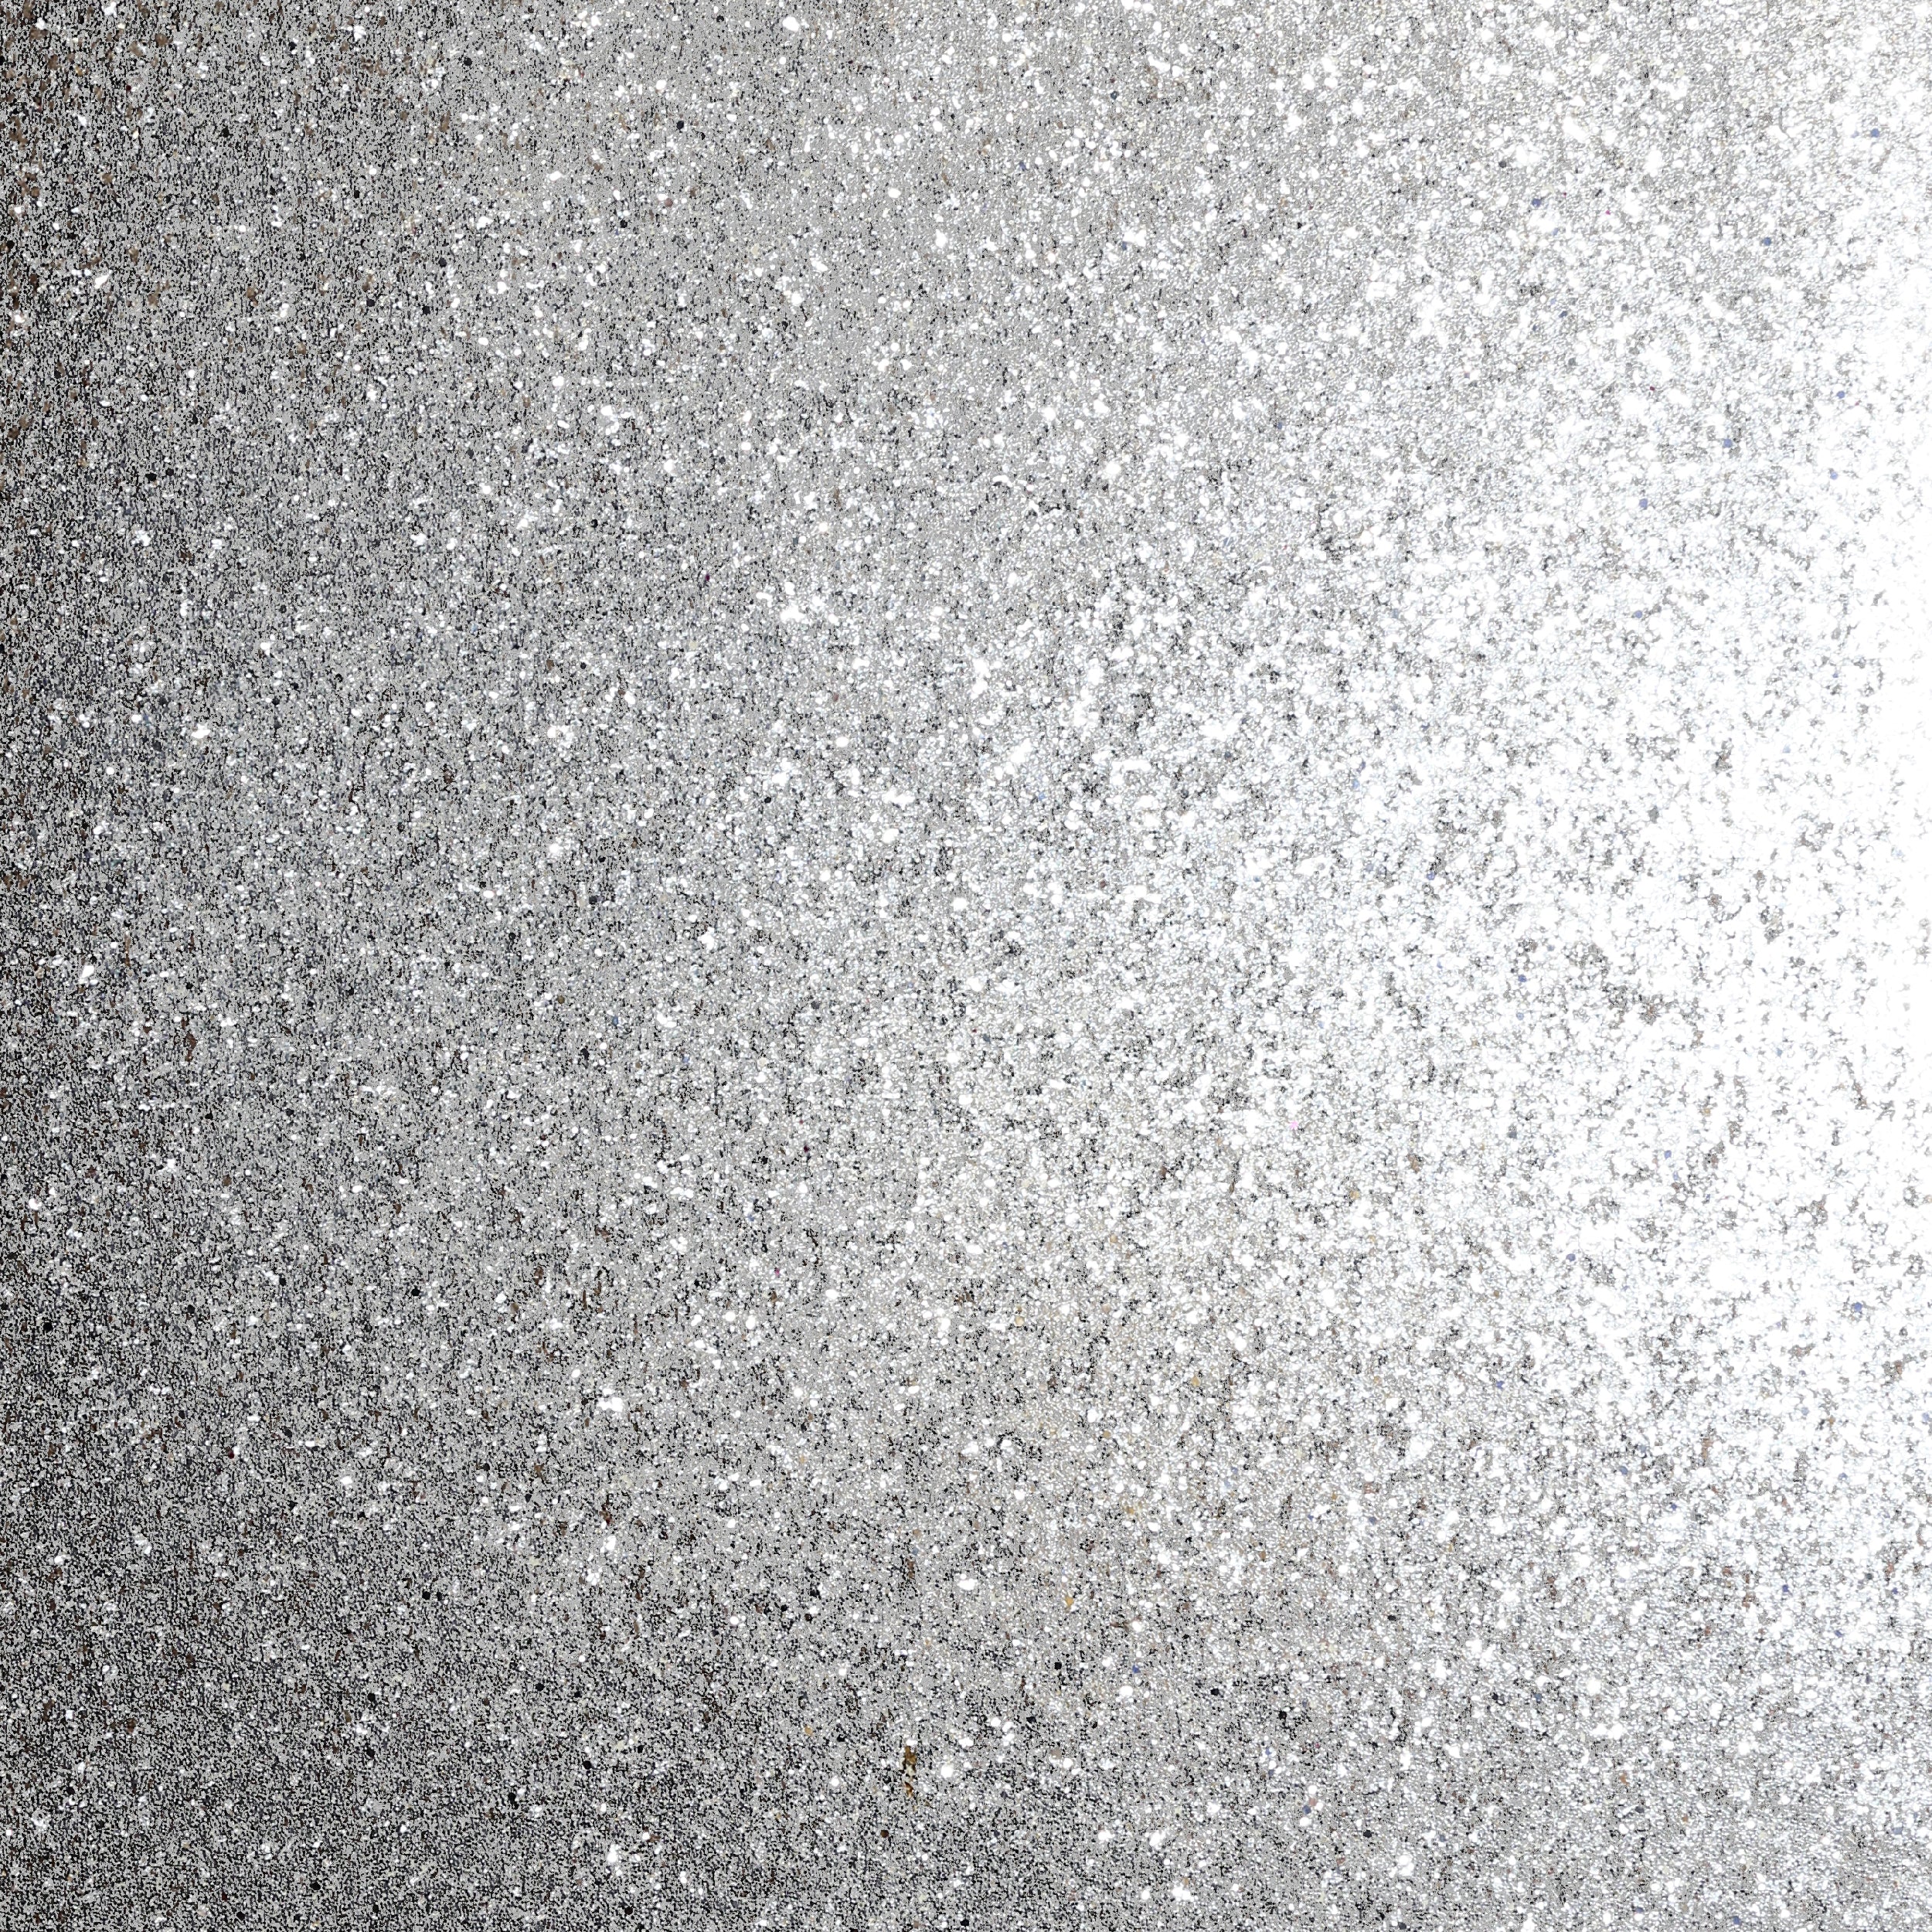 Sequin Sparkle Silver Wallpaper